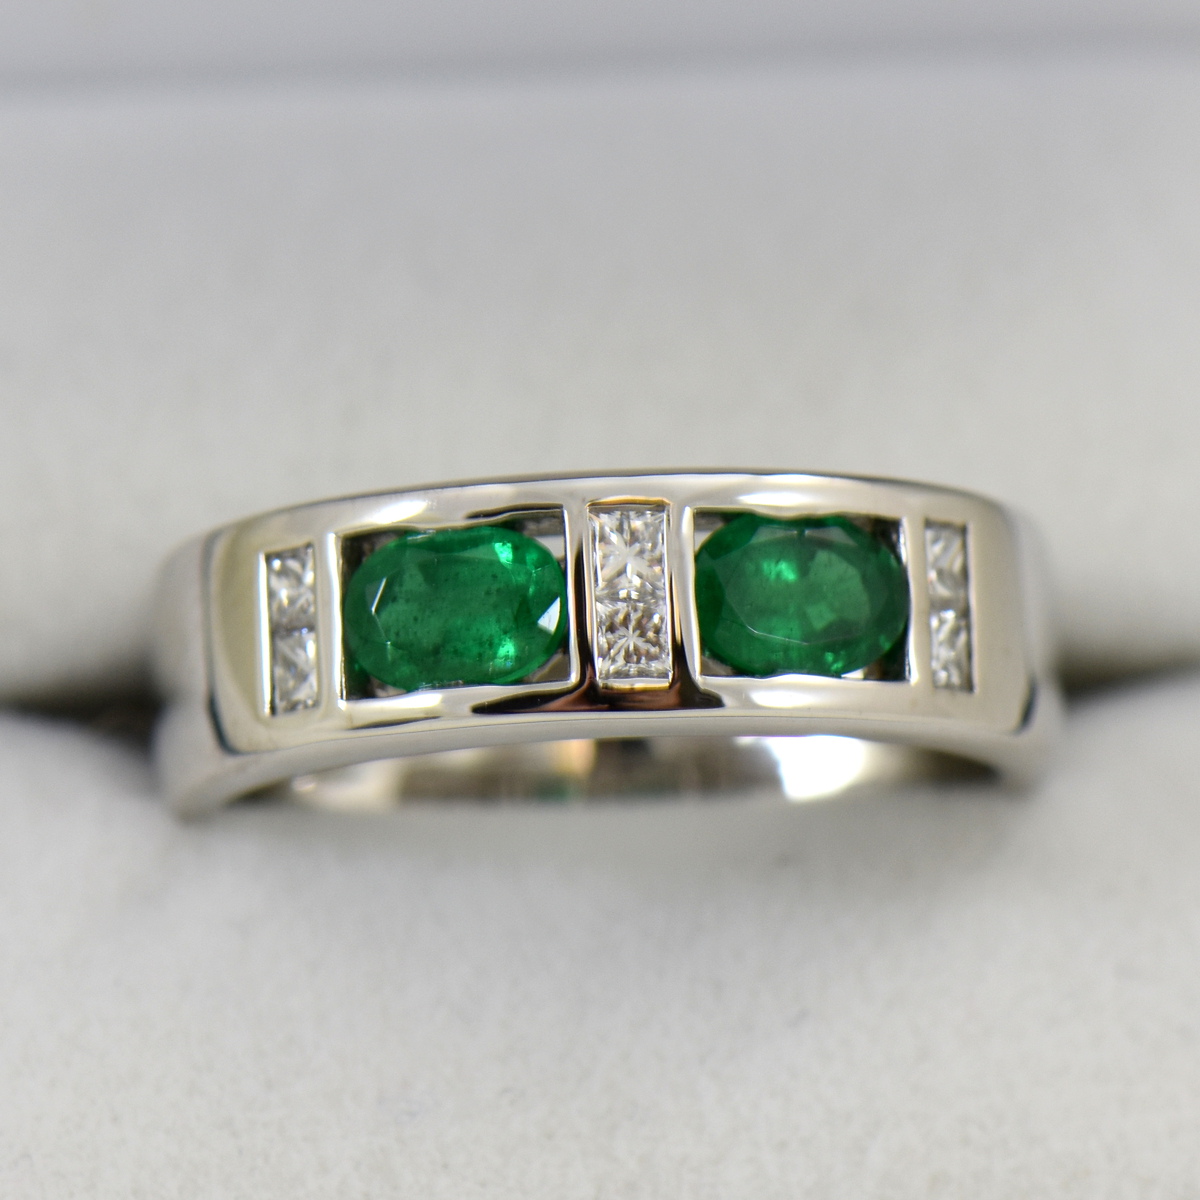 1 Carat Astrological Oval Cut Natural Emerald Men's Ring Silver 925